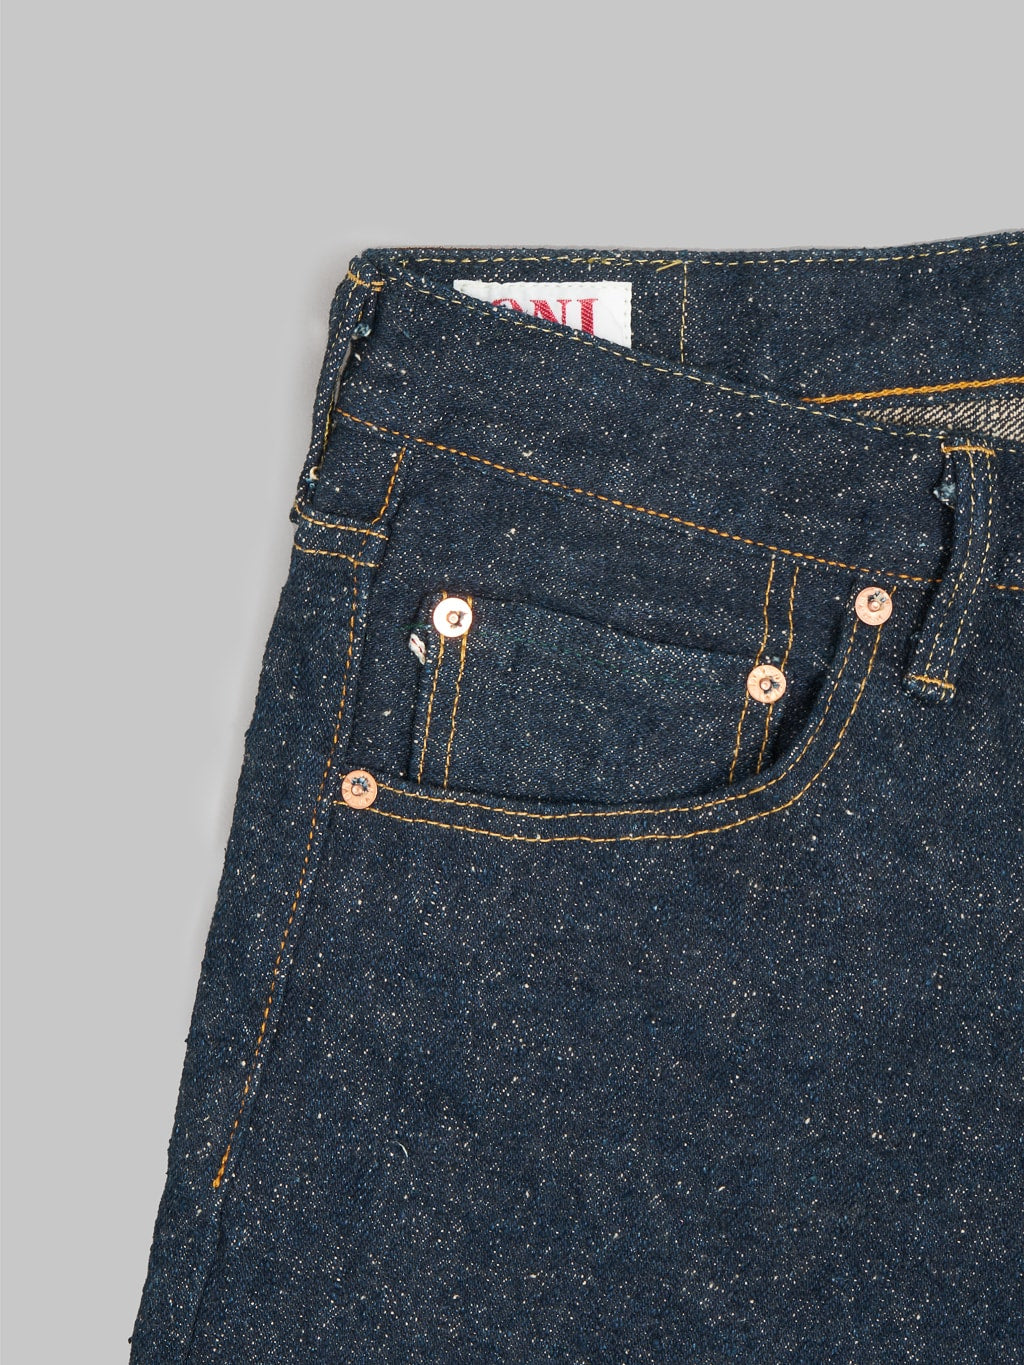 ONI Denim 246SESR "Secret Super Rough" 20oz Neat Straight Jeans